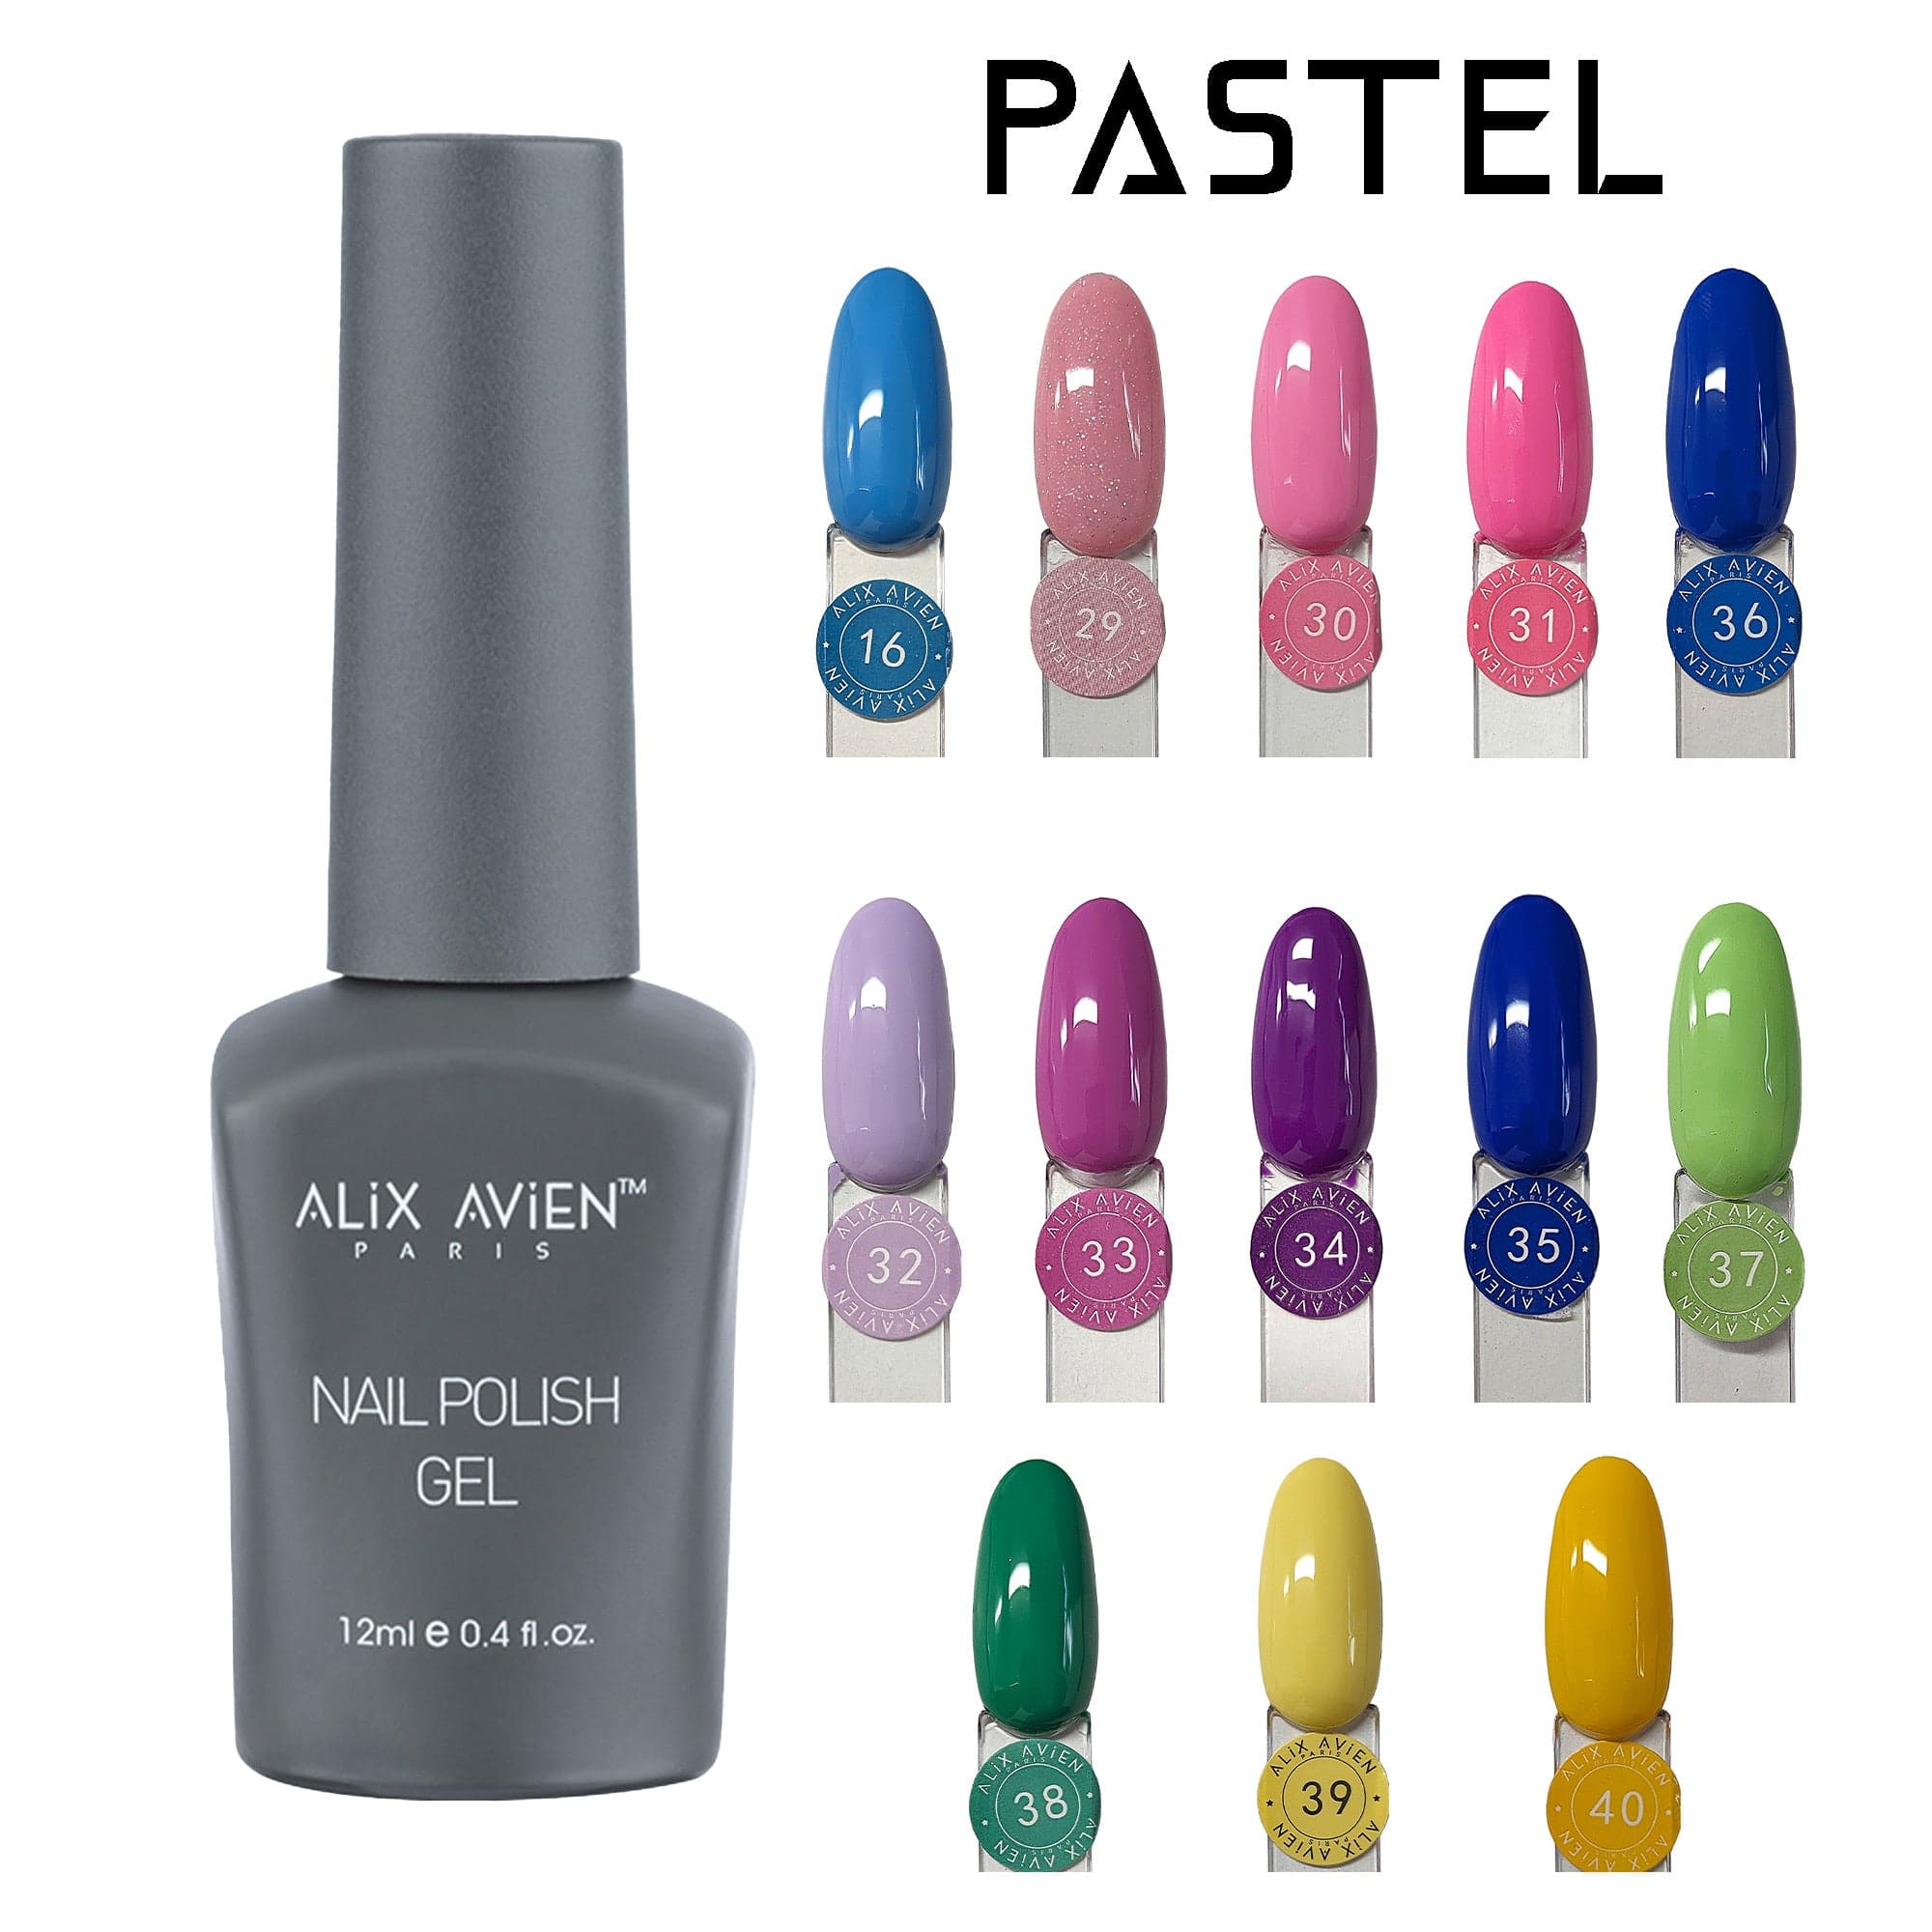 Alix Avien - Nail Polish Gel No.29 (Sparkling Pink) - Eson Direct